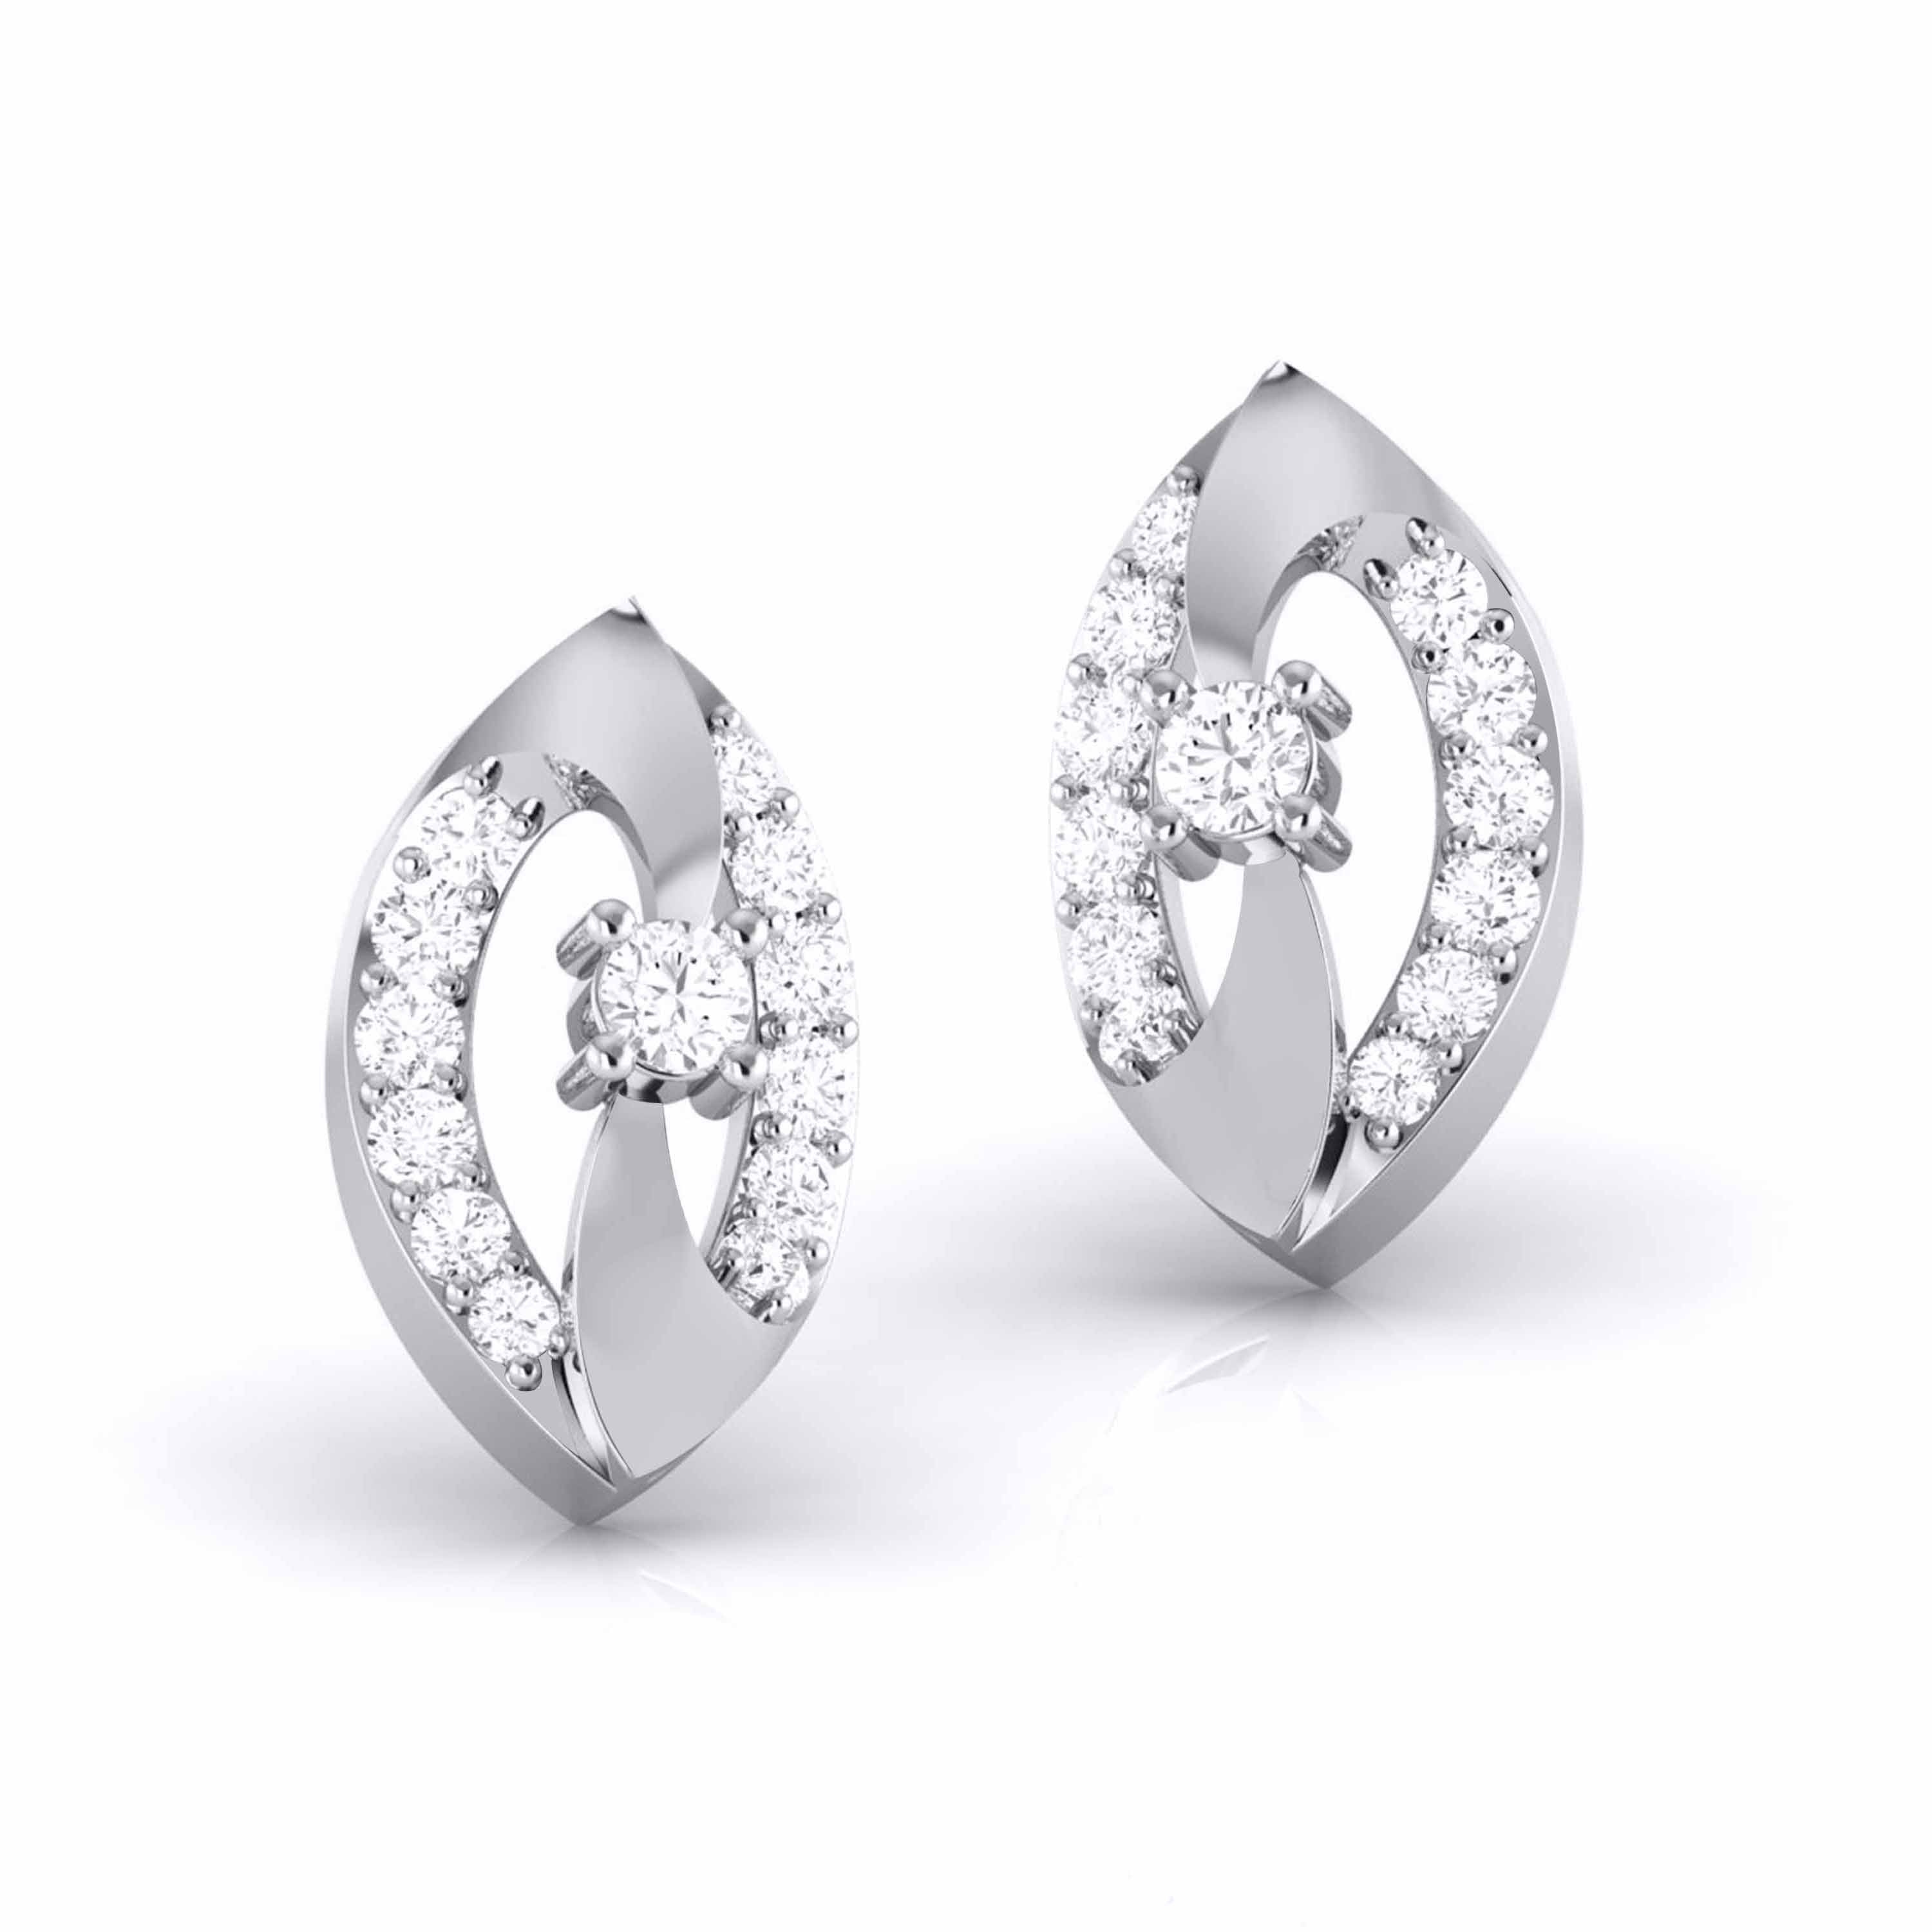 Malabar Ivory Pearl Diamond Earrings Platinum 24k Gold